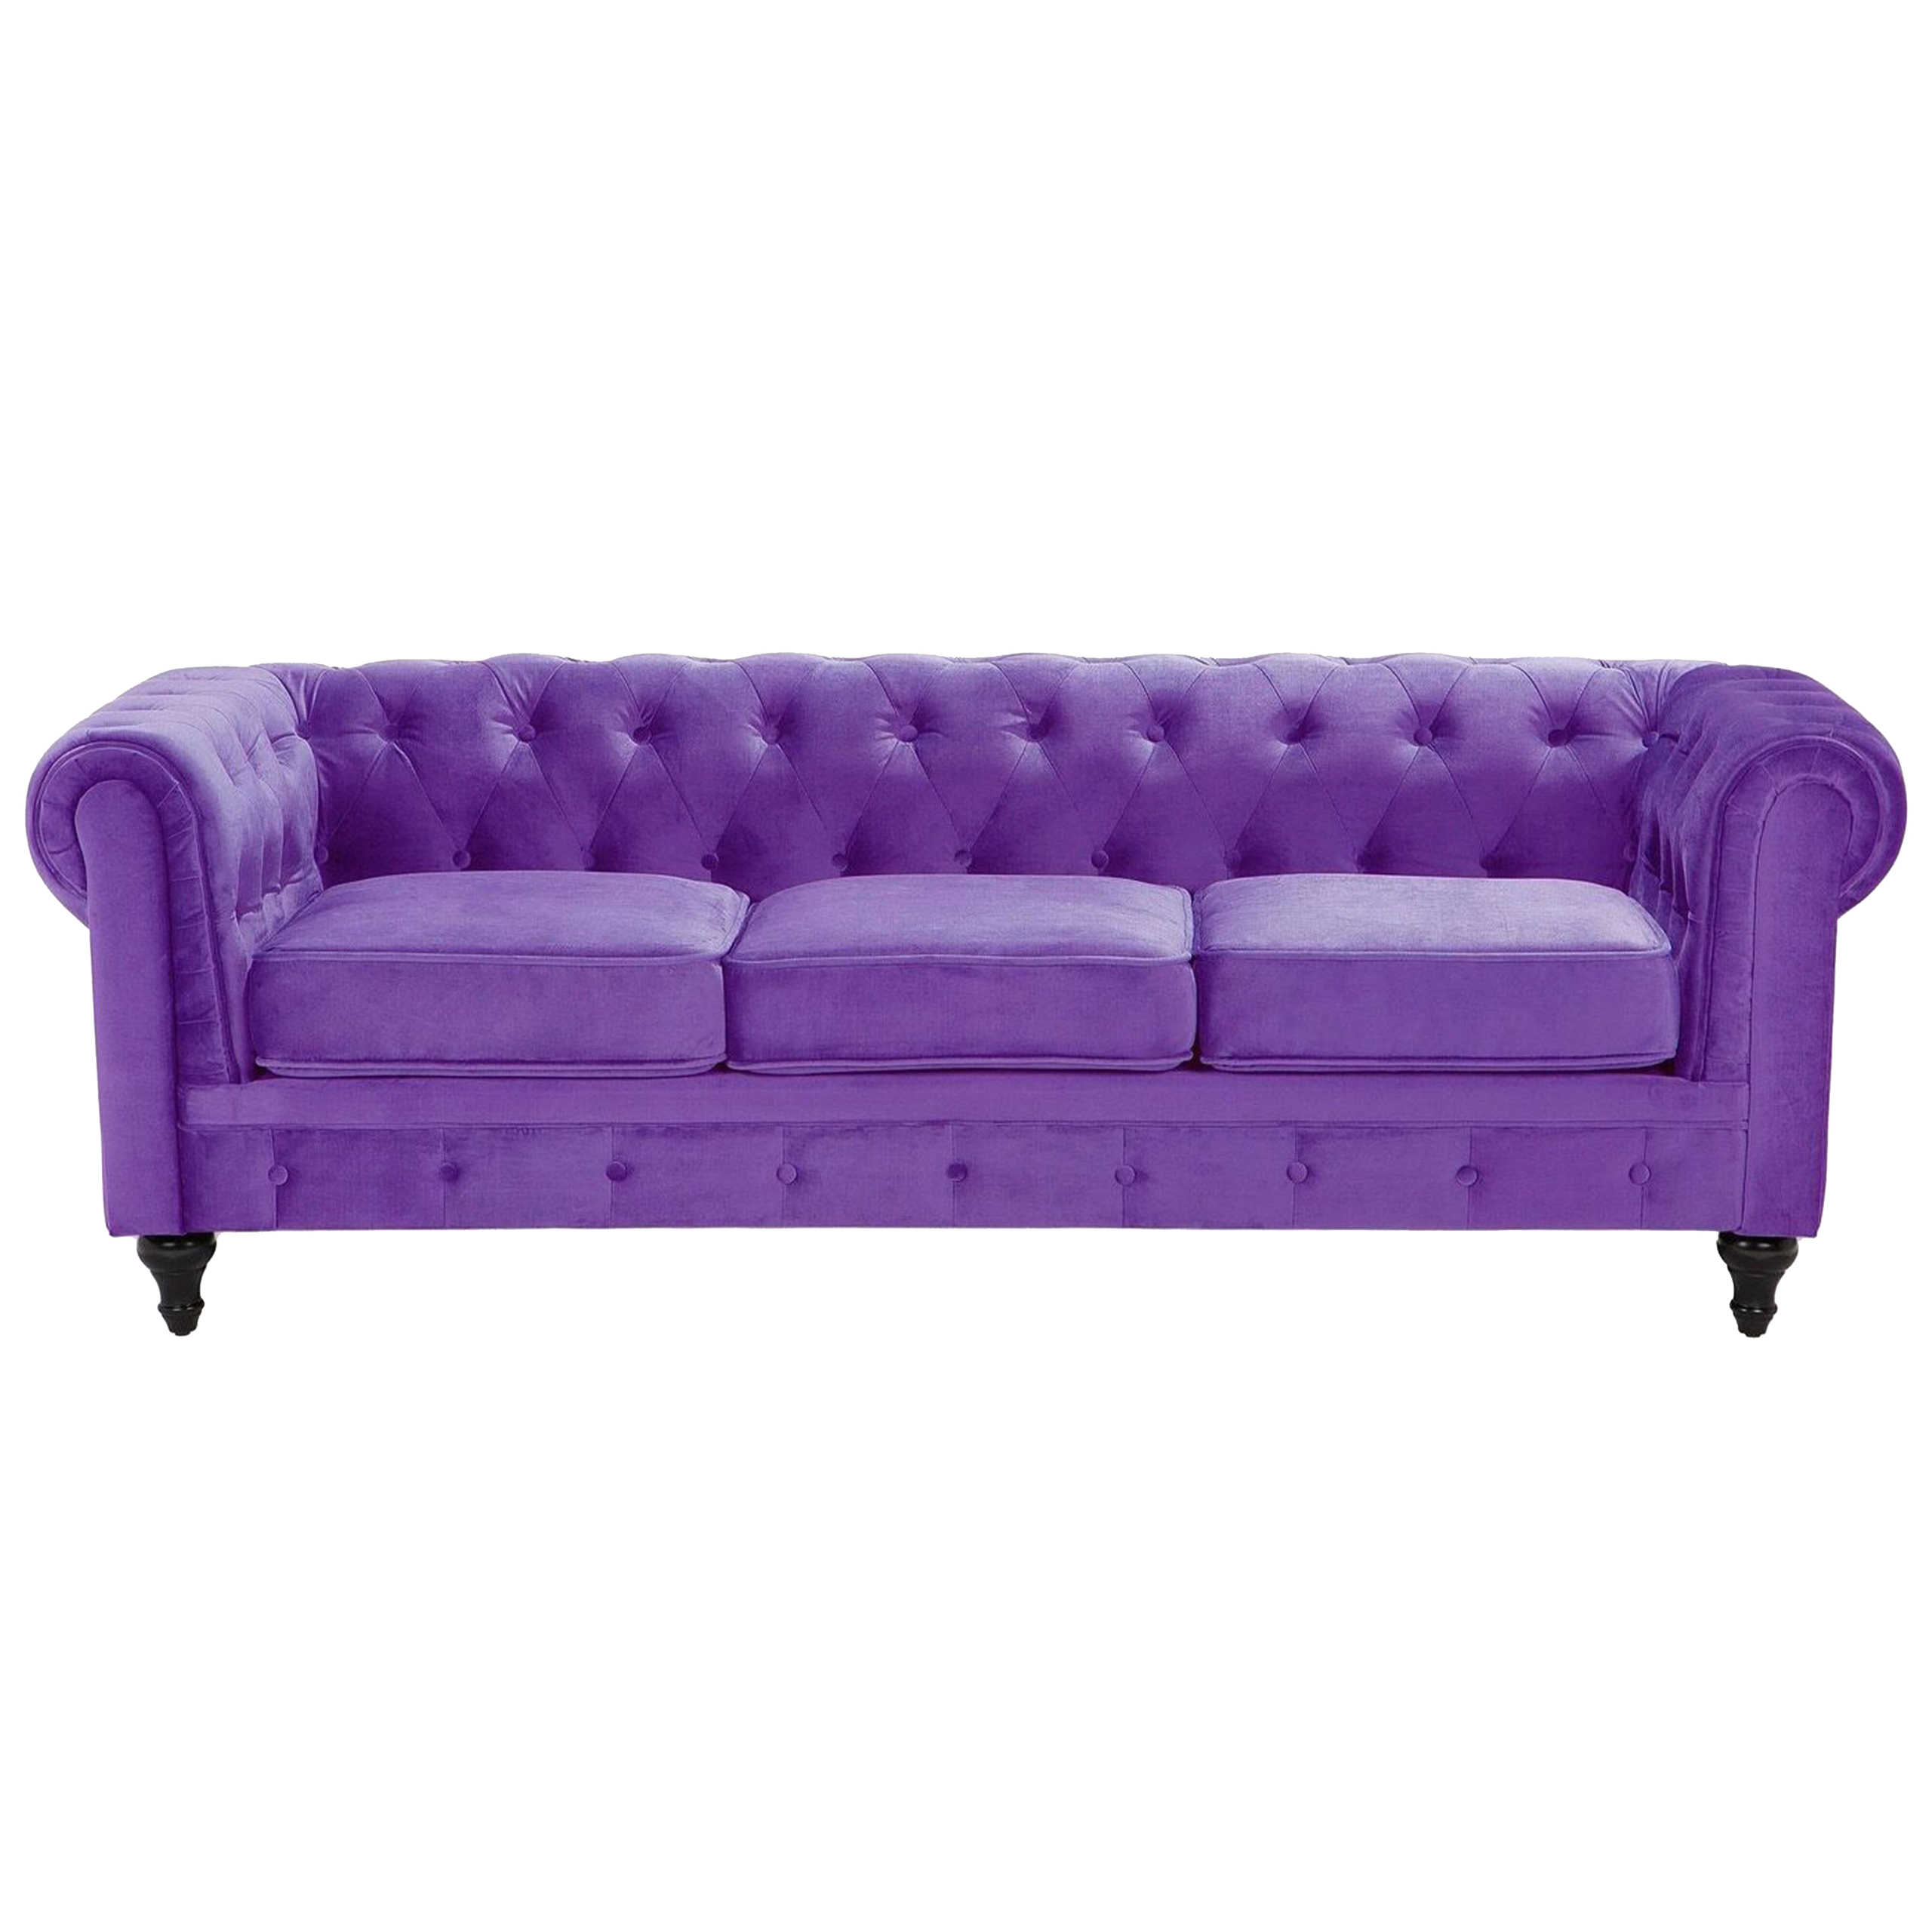 Beliani Chesterfield Sofa Purple Velvet Fabric Upholstery Dark Wood Legs 3 Seater Contemporary